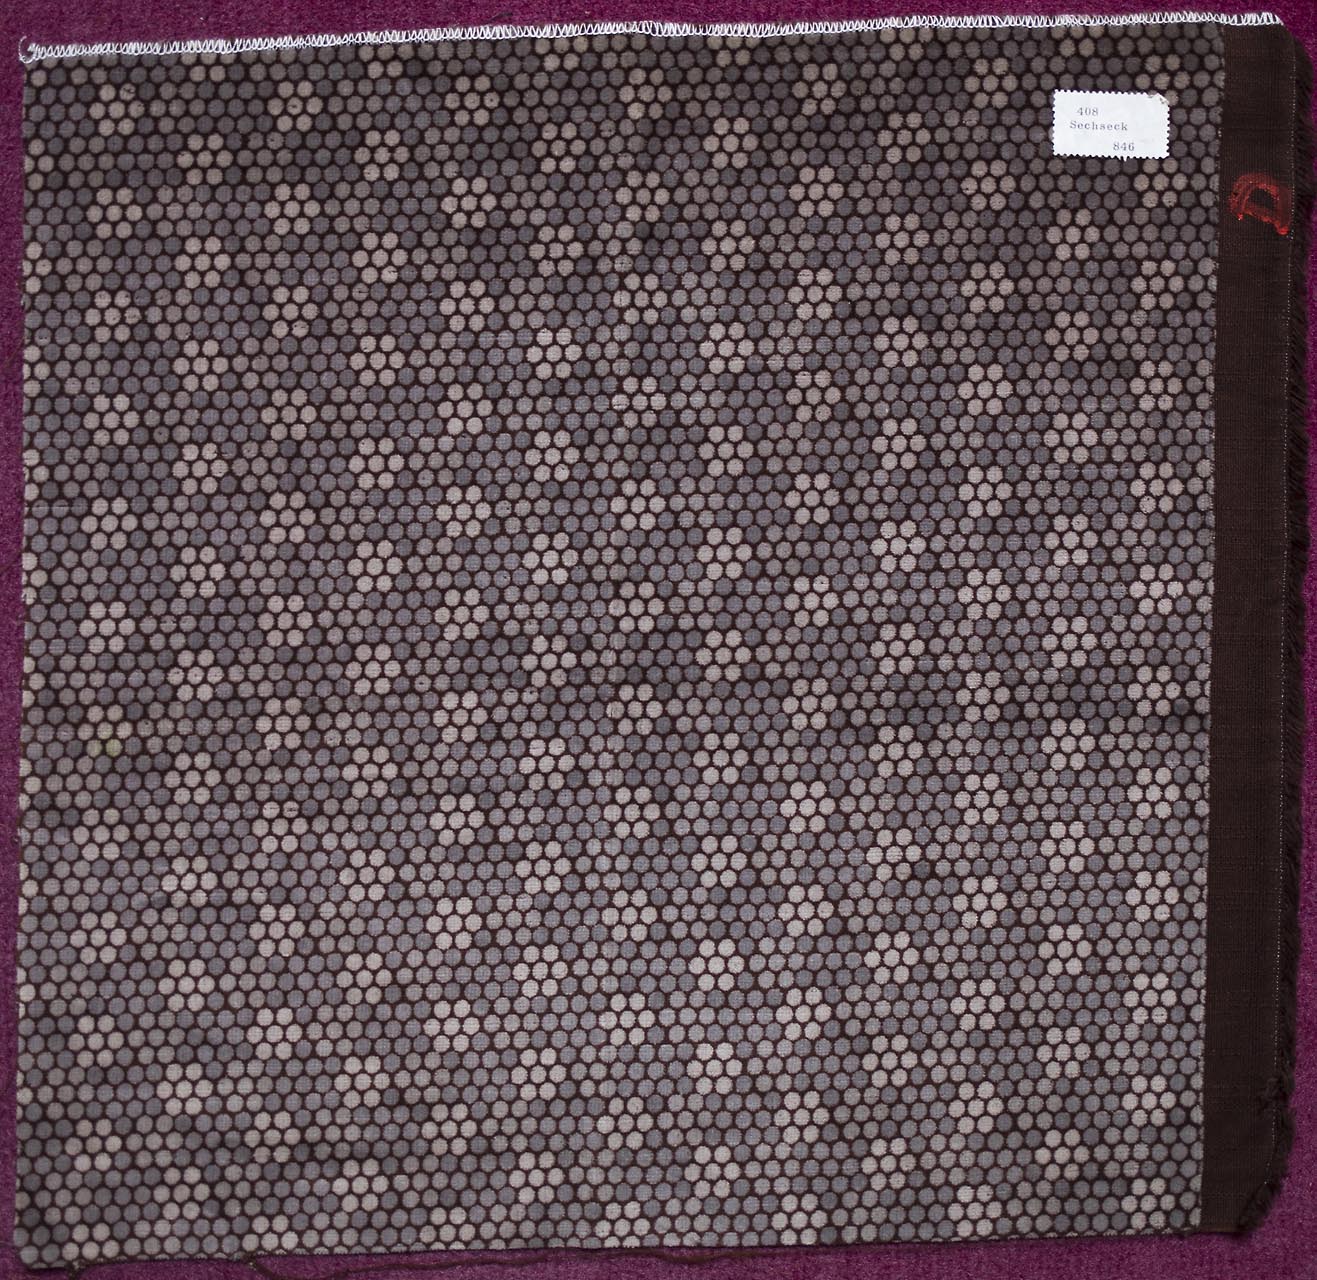 1978 Sechaeck velour fabric